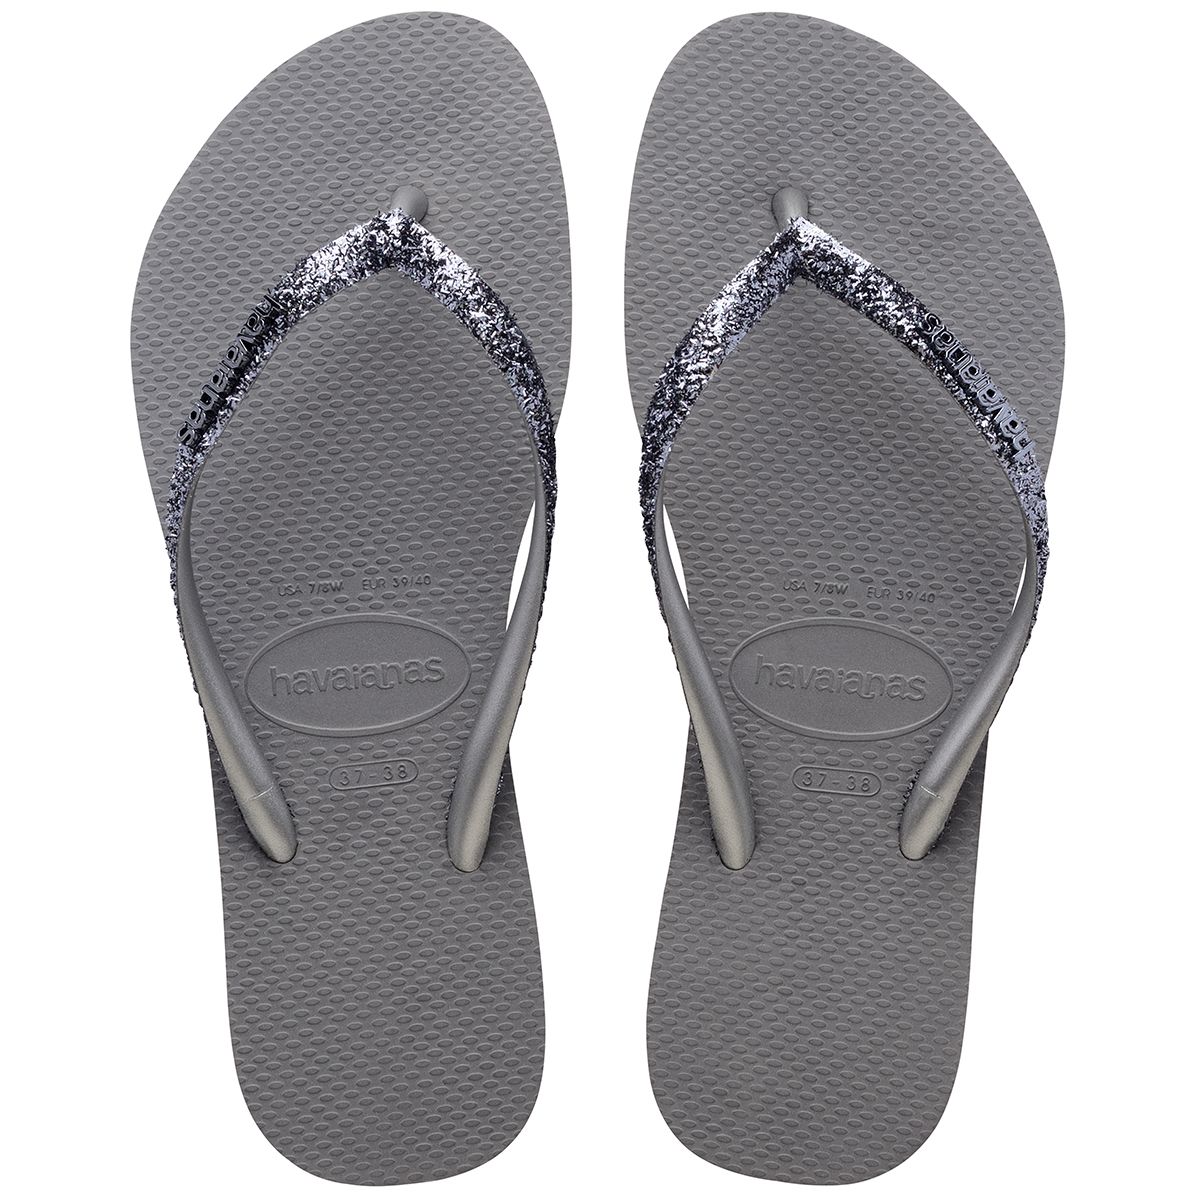 Havaianas Slim Glitter 2 Womens Sandal 5178-Steel Grey 7